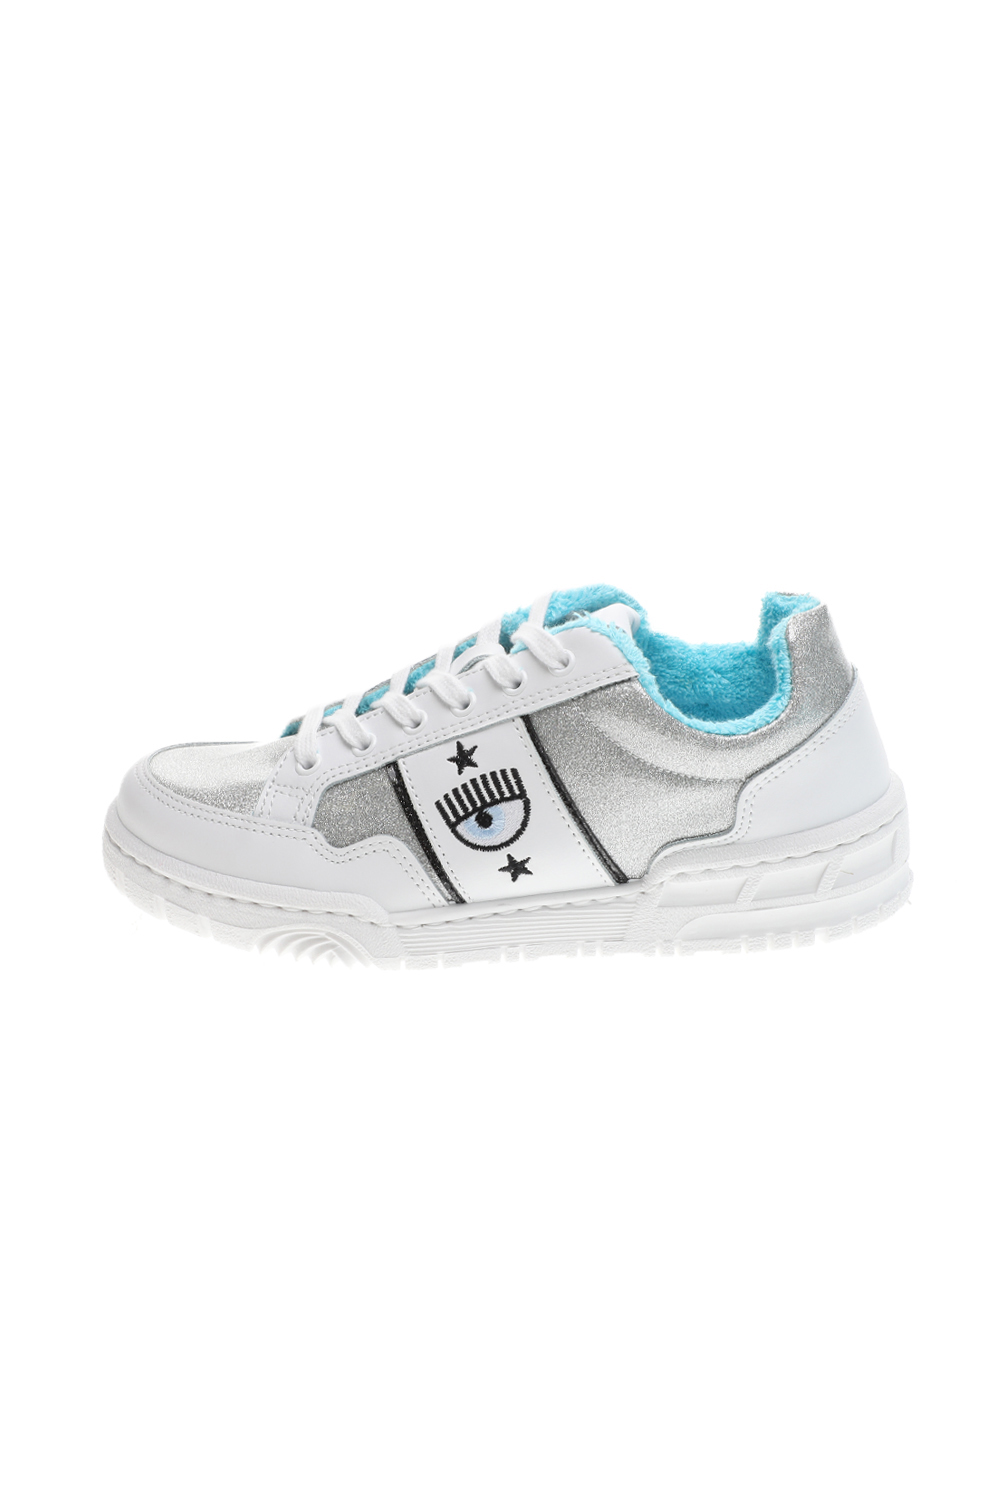 CHIARRA FERRAGNI - Γυναικεία sneakers CHIARRA FERRAGNI CF2832-067 sneakers Γυναικεία/Παπούτσια/Sneakers